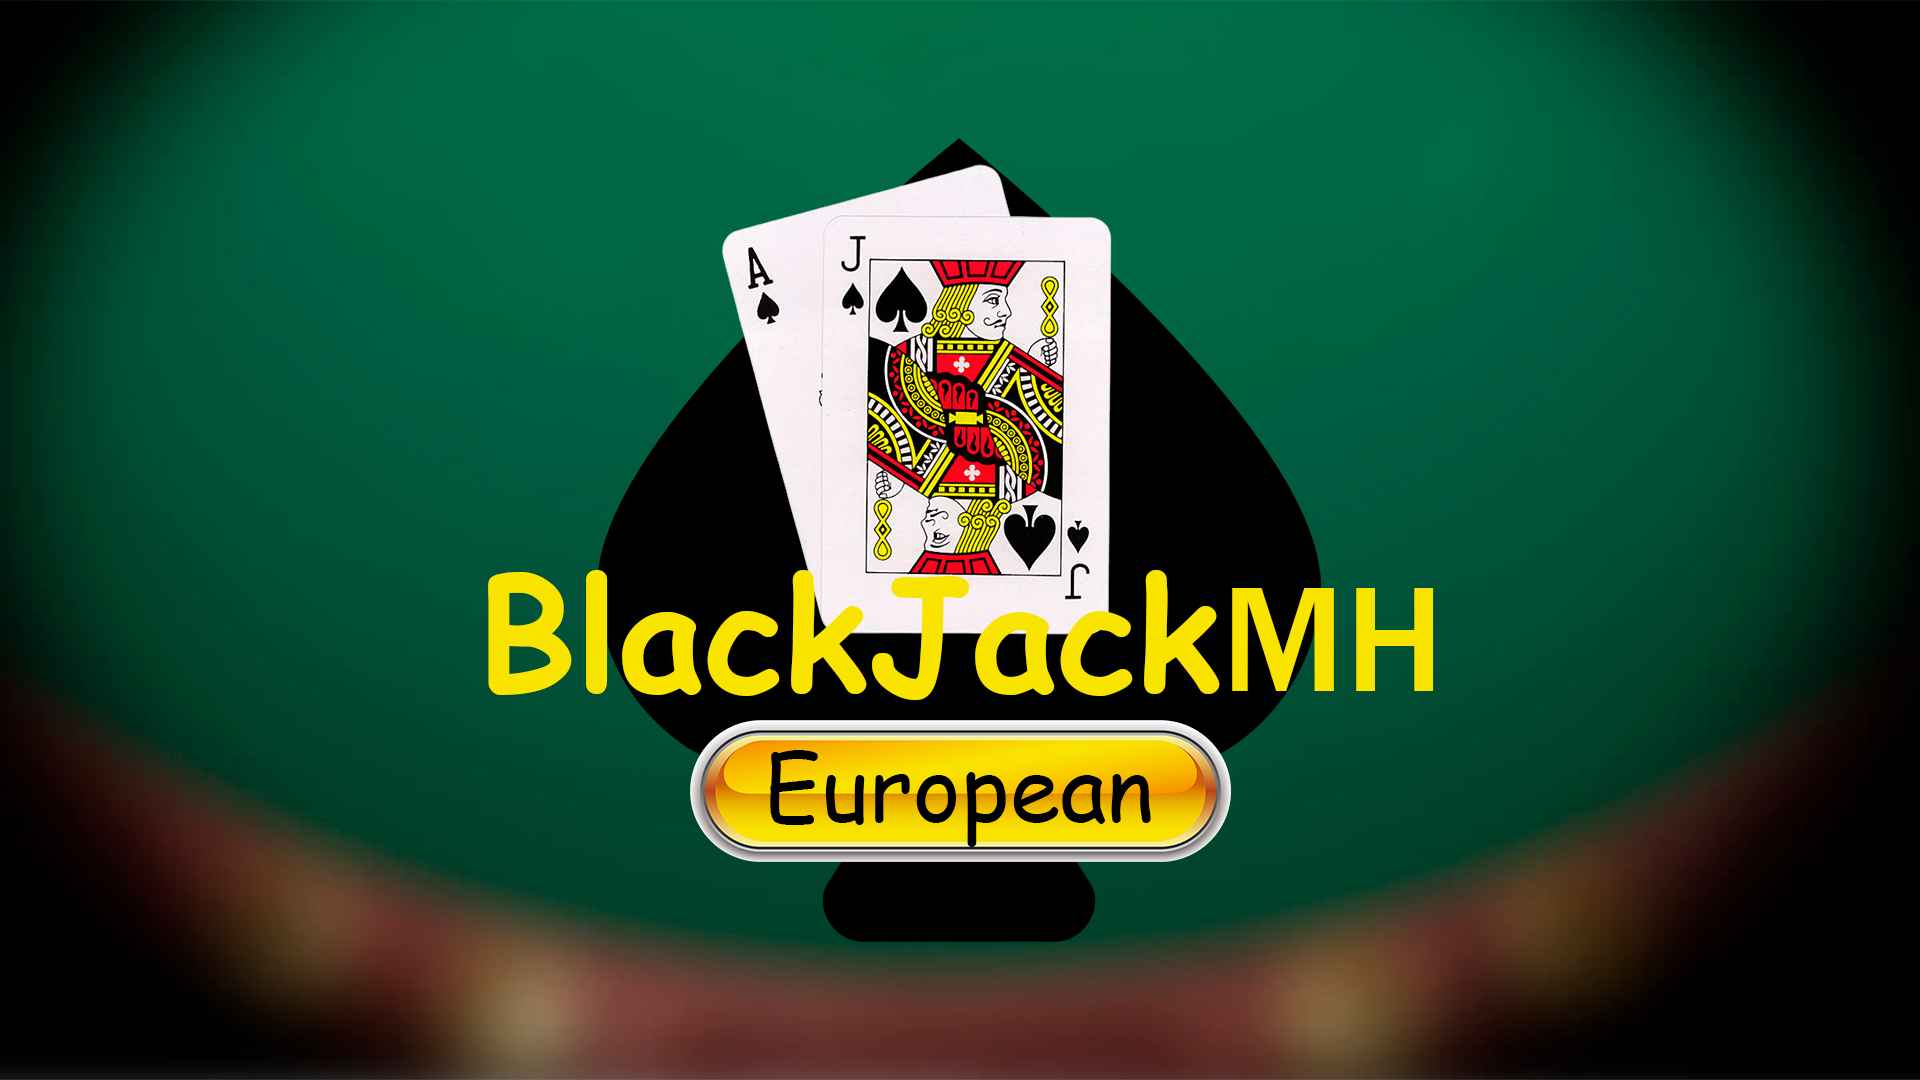 European BlackJack by Play’n GO Logo